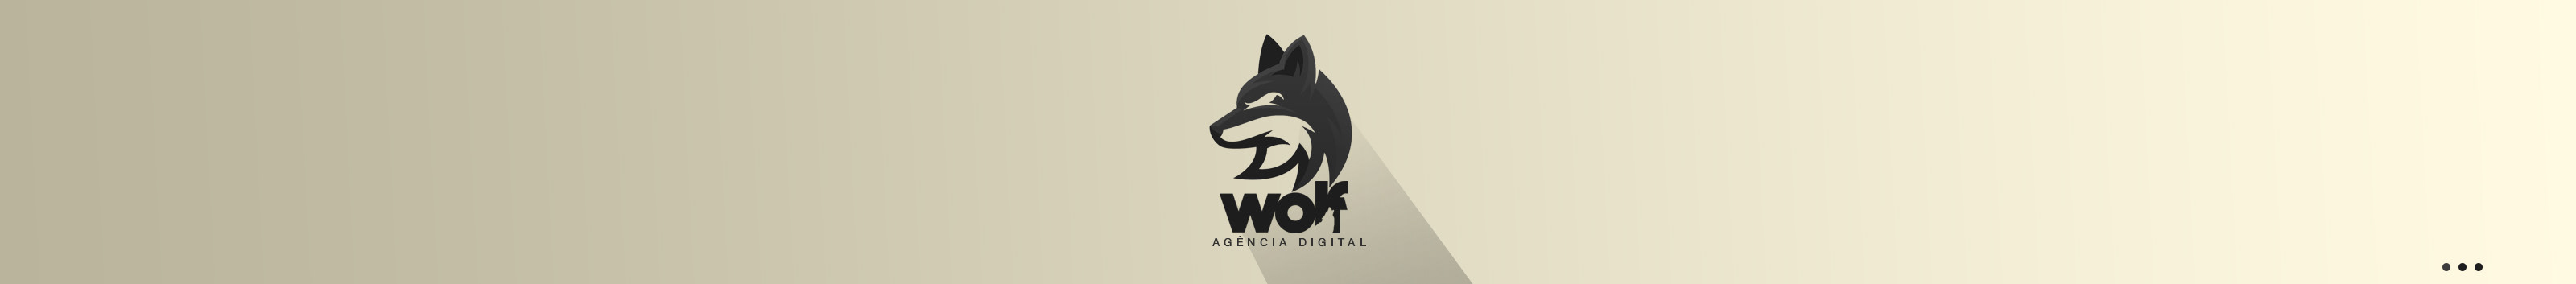 Agência Wolf のプロファイルバナー